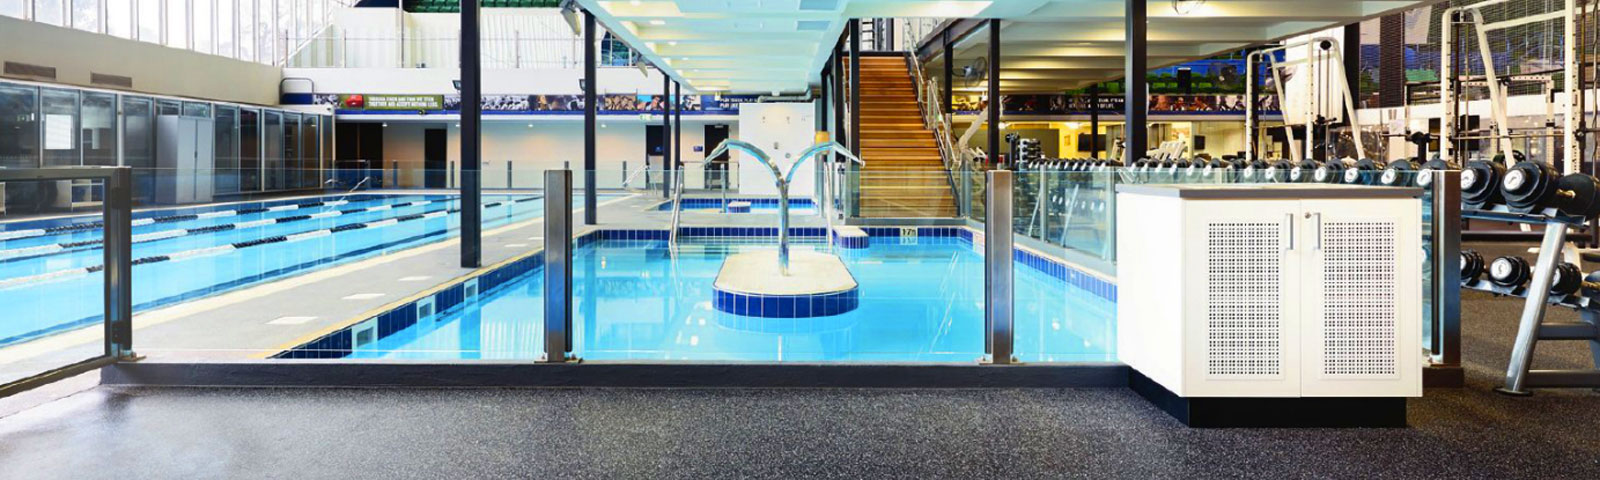 Aquatic and Recreation Centre Flooring